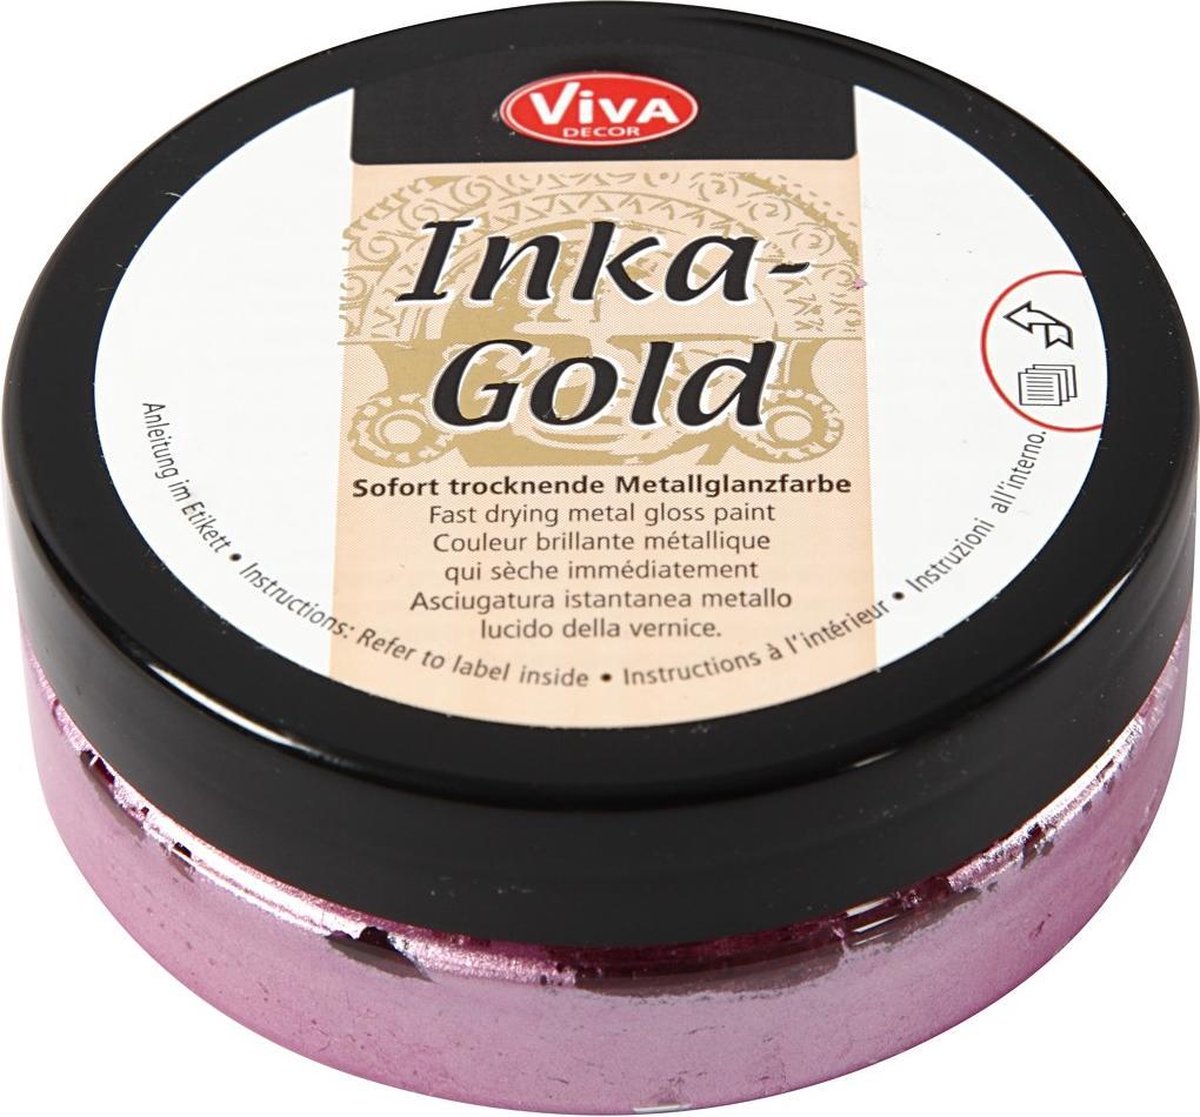 Inka-Gold, 50 ml, magenta